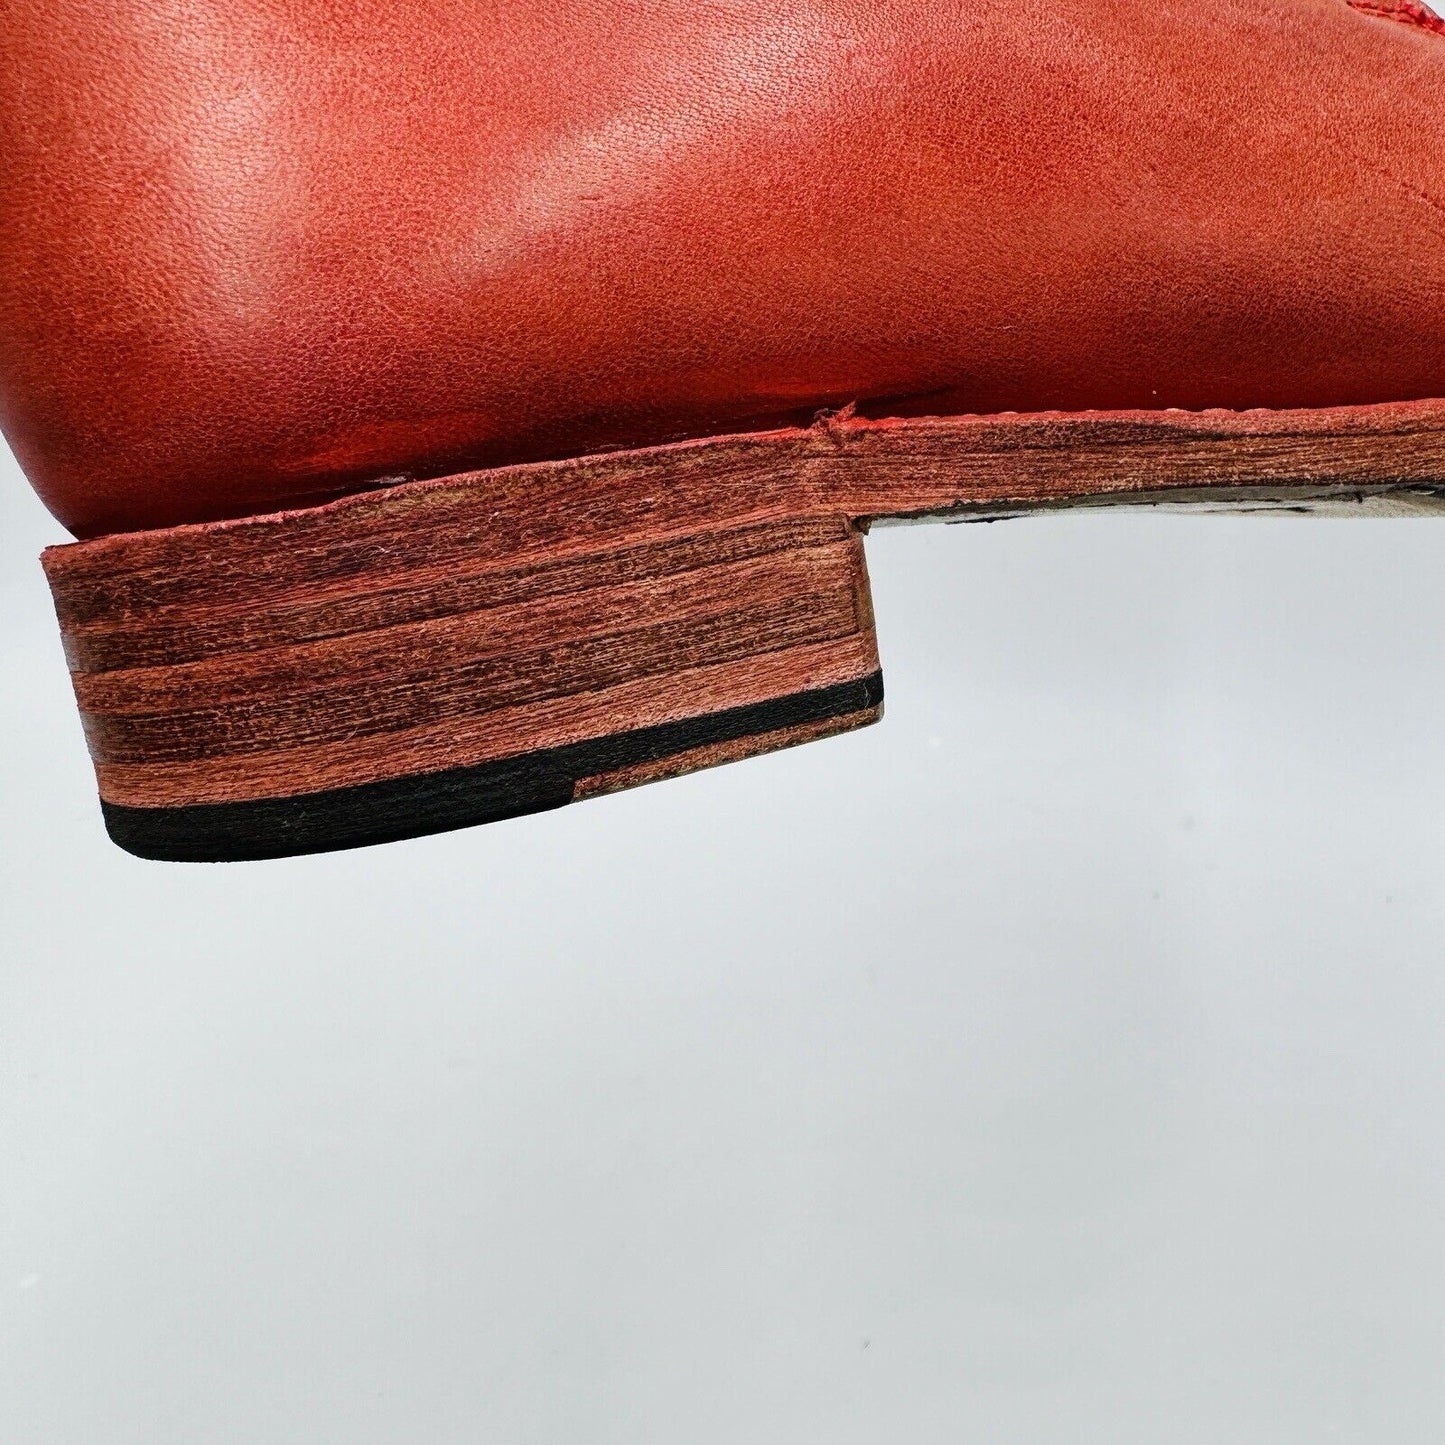 EVARIST BERTRAN EB2 RED CULATA Leather Men Shoes DERBY Spain Handmade S 10.5 US